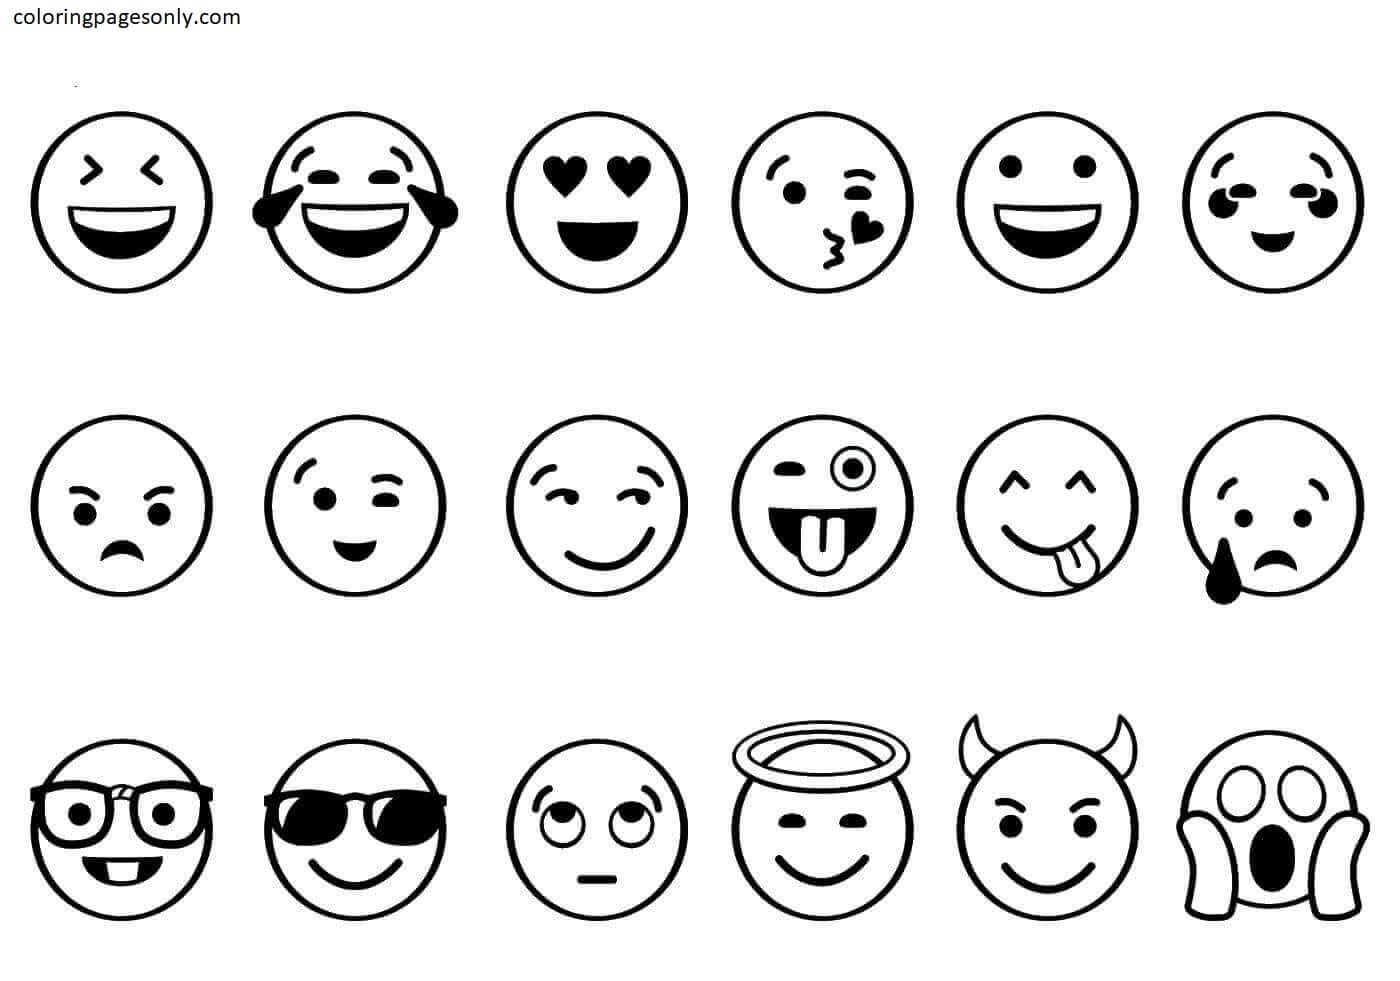 Ninja Emoji coloring page  Free Printable Coloring Pages